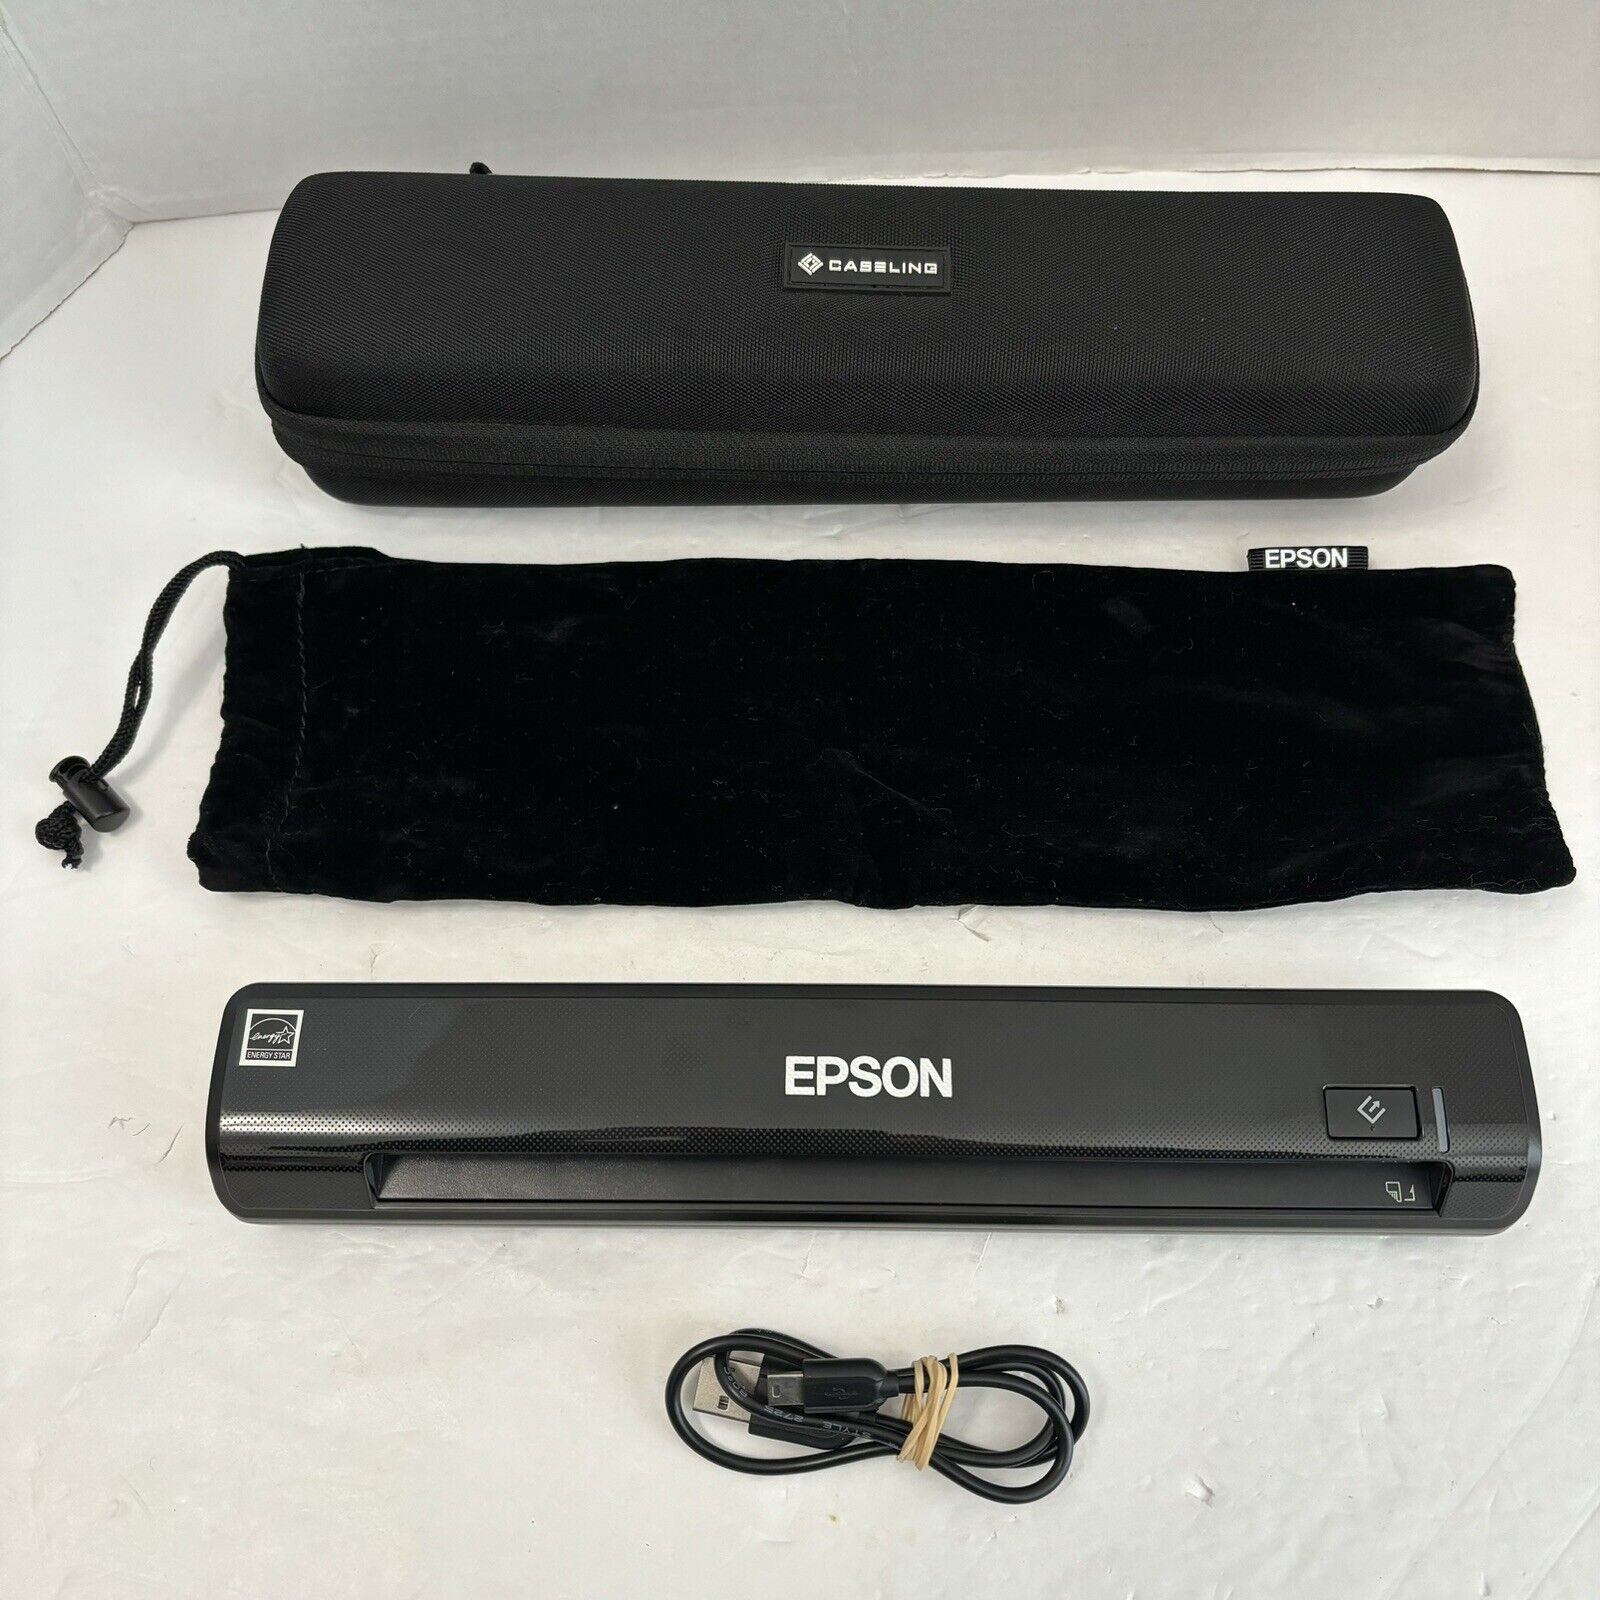 Epson WorkForce DS-30 Black Portable USB Document Scanner Tested